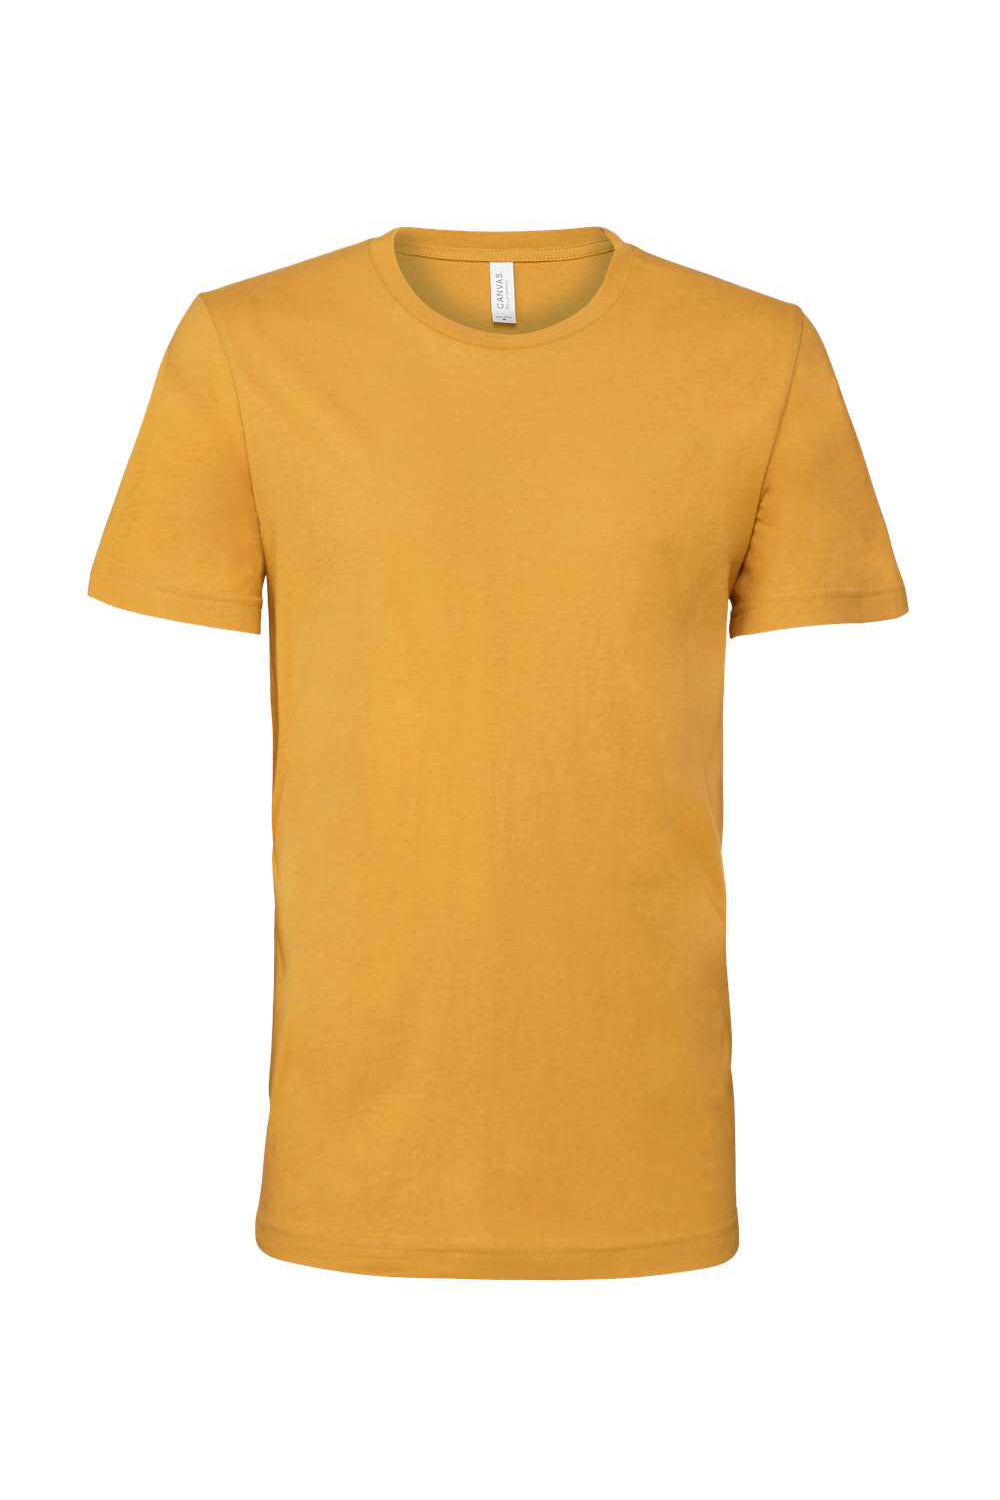 Bella + Canvas BC3001/3001C Mens Jersey Short Sleeve Crewneck T-Shirt Mustard Yellow Flat Front